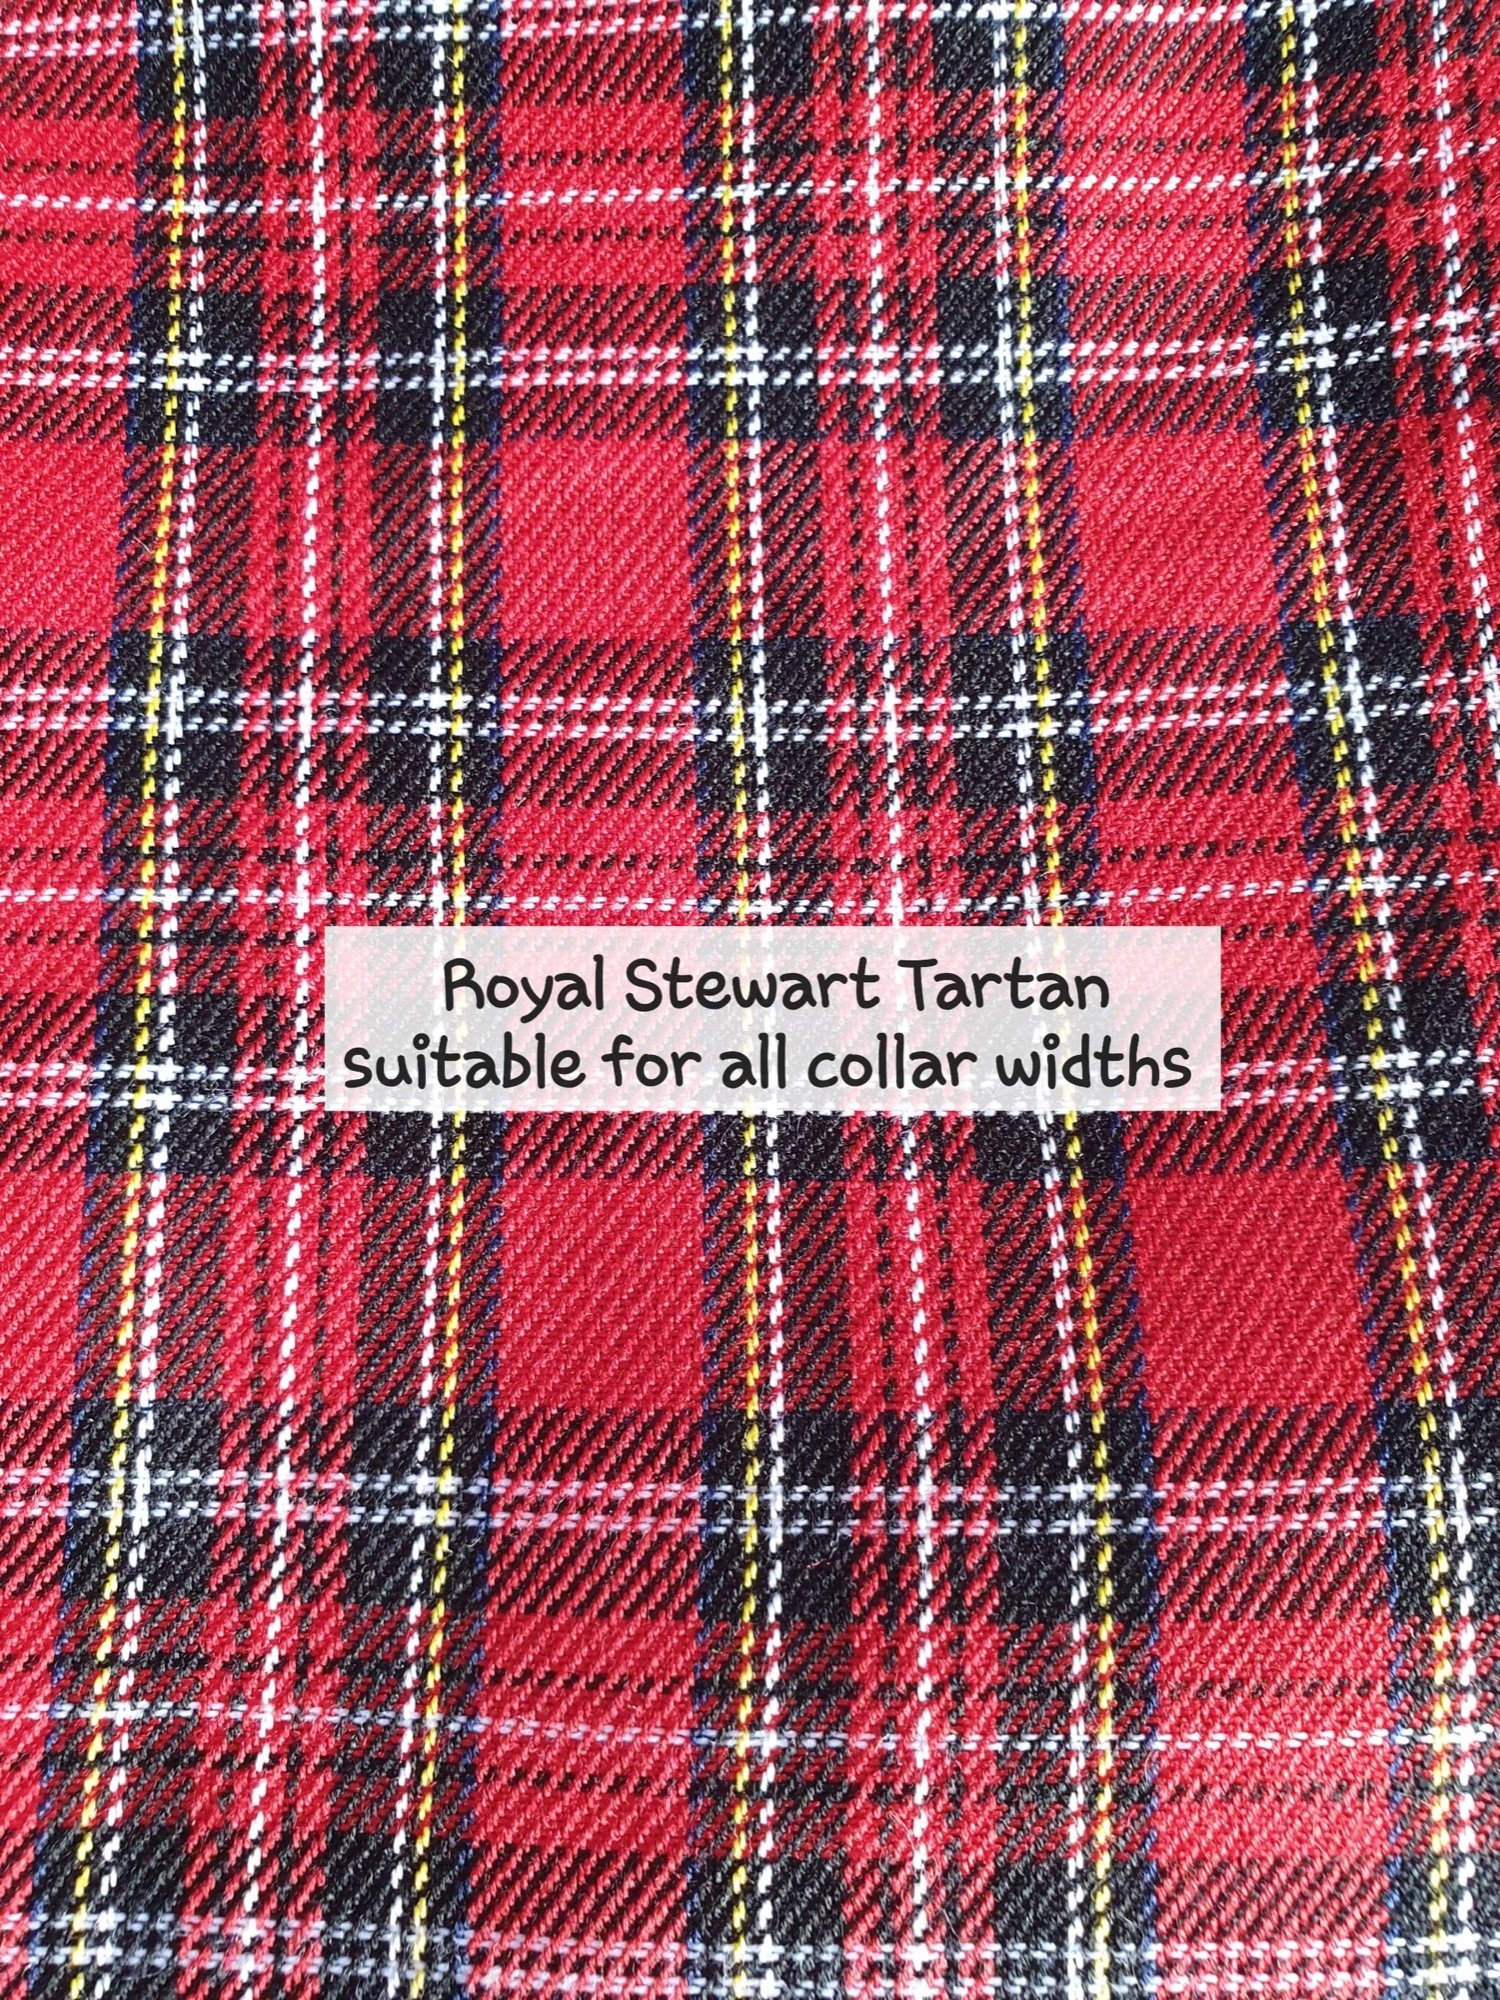 Royal Stewart Tartan